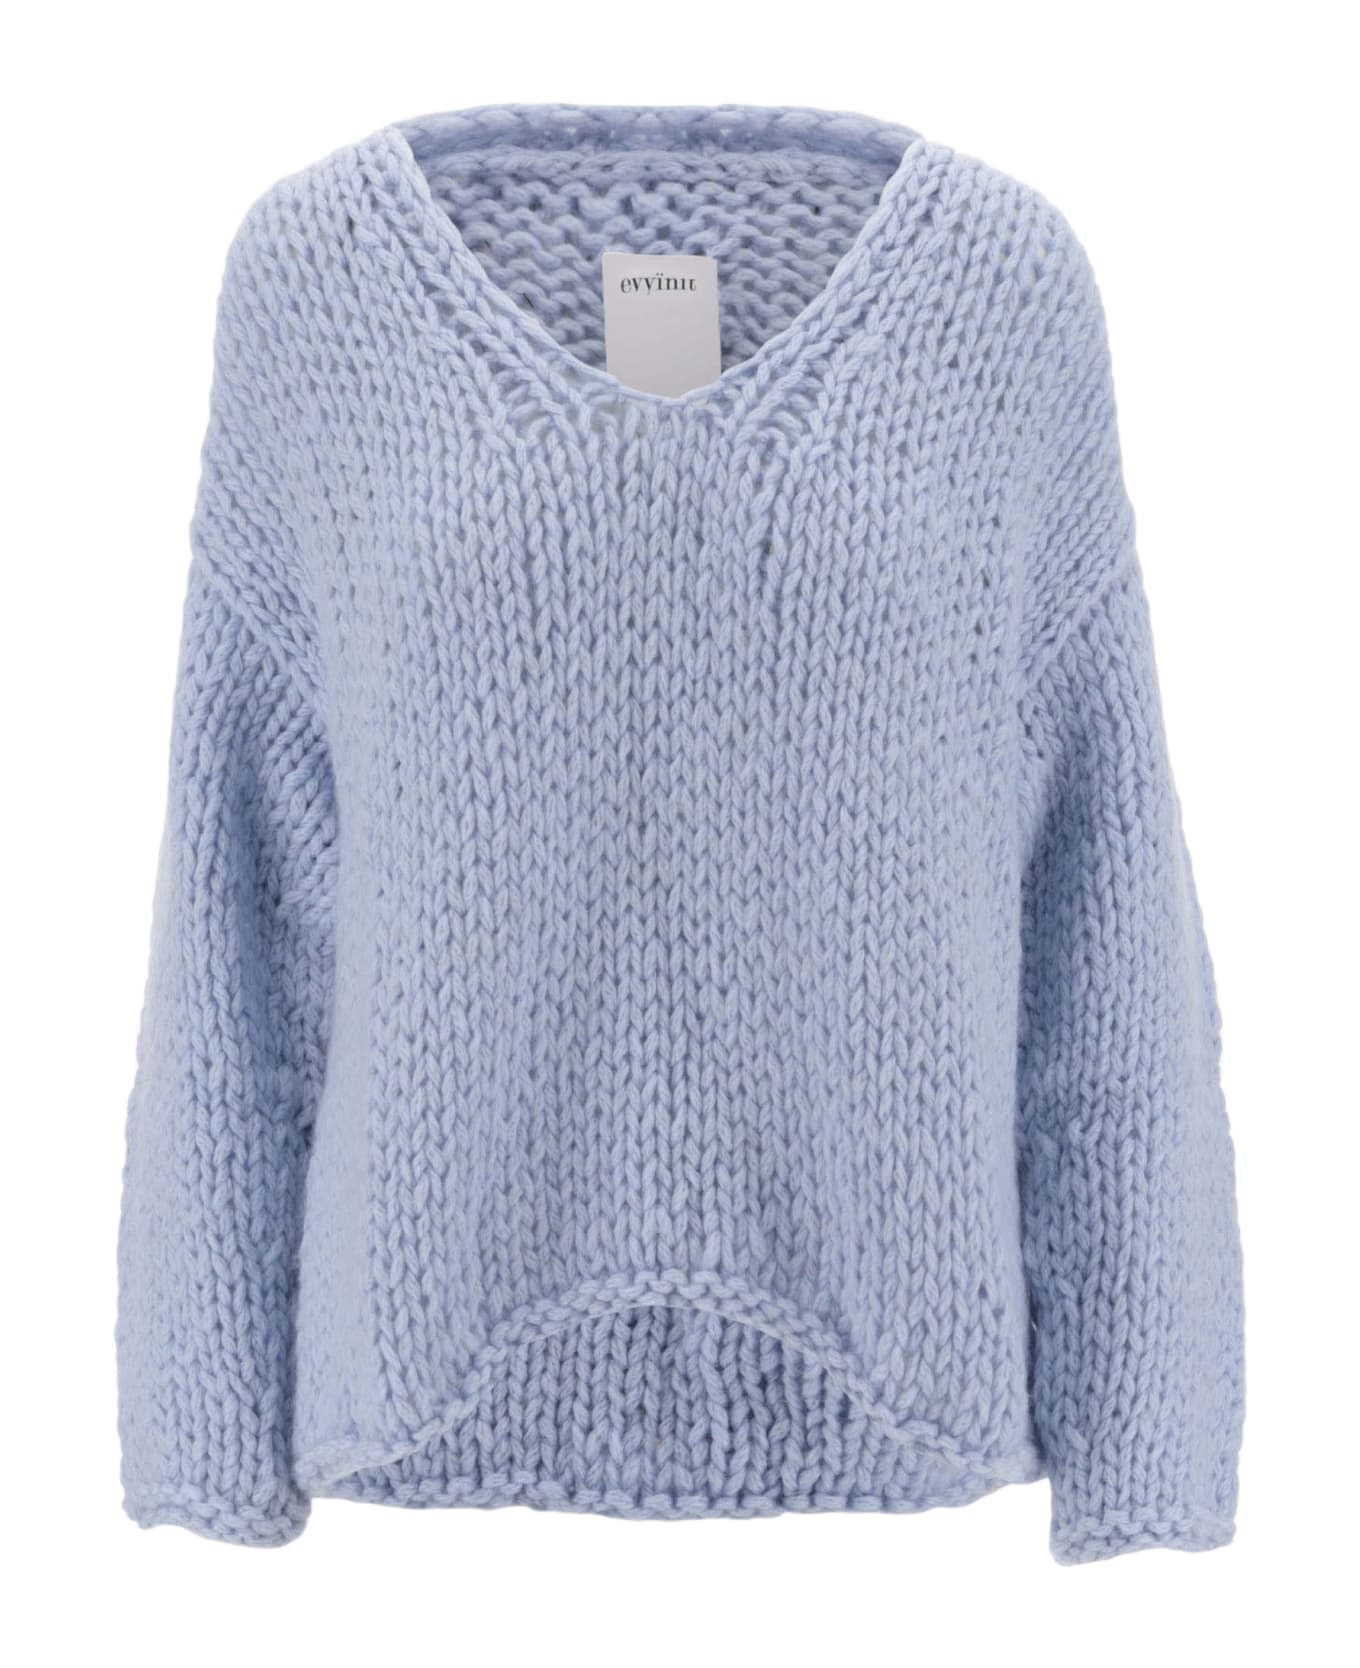 Evyinit Merino Wool Blend Sweater - Clear Blue